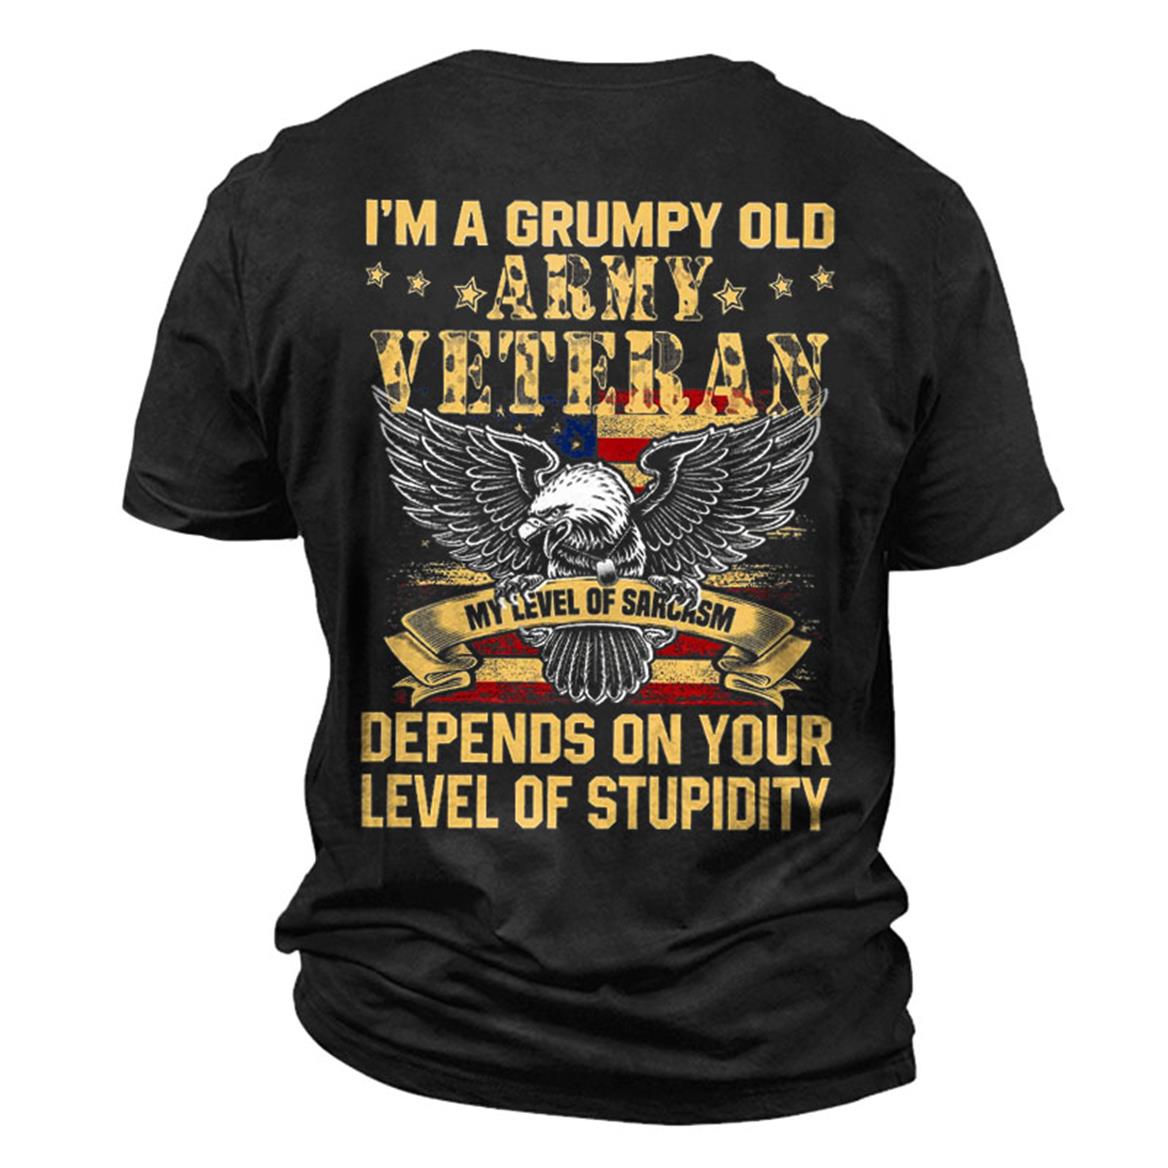 Men's I'm A Grumpy Chic Old Army Veteran Cotton T-shirt